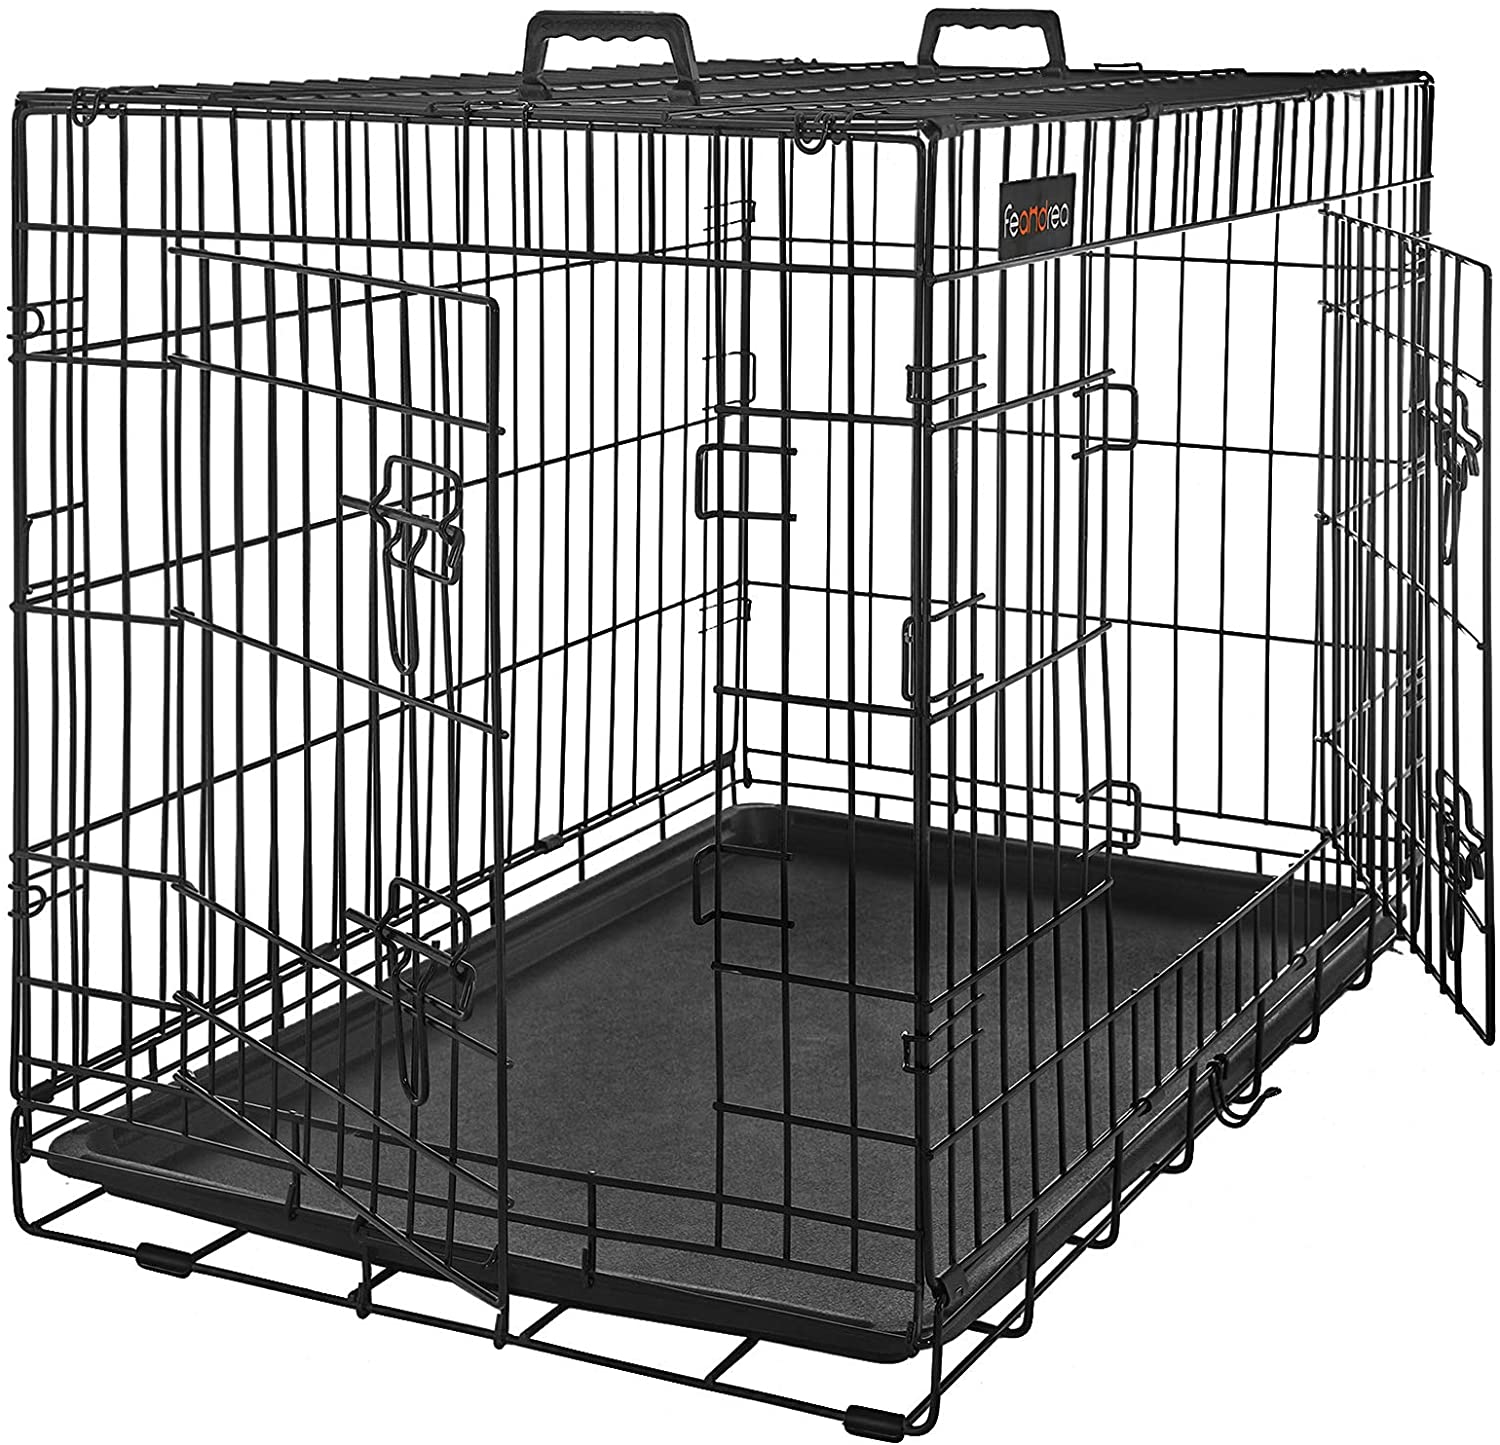  FEANDREA Jaula Metálica para Perros, Transportín Plegable para Mascotas, XL 91 x 58 x 64 cm, Negro PPD36H 